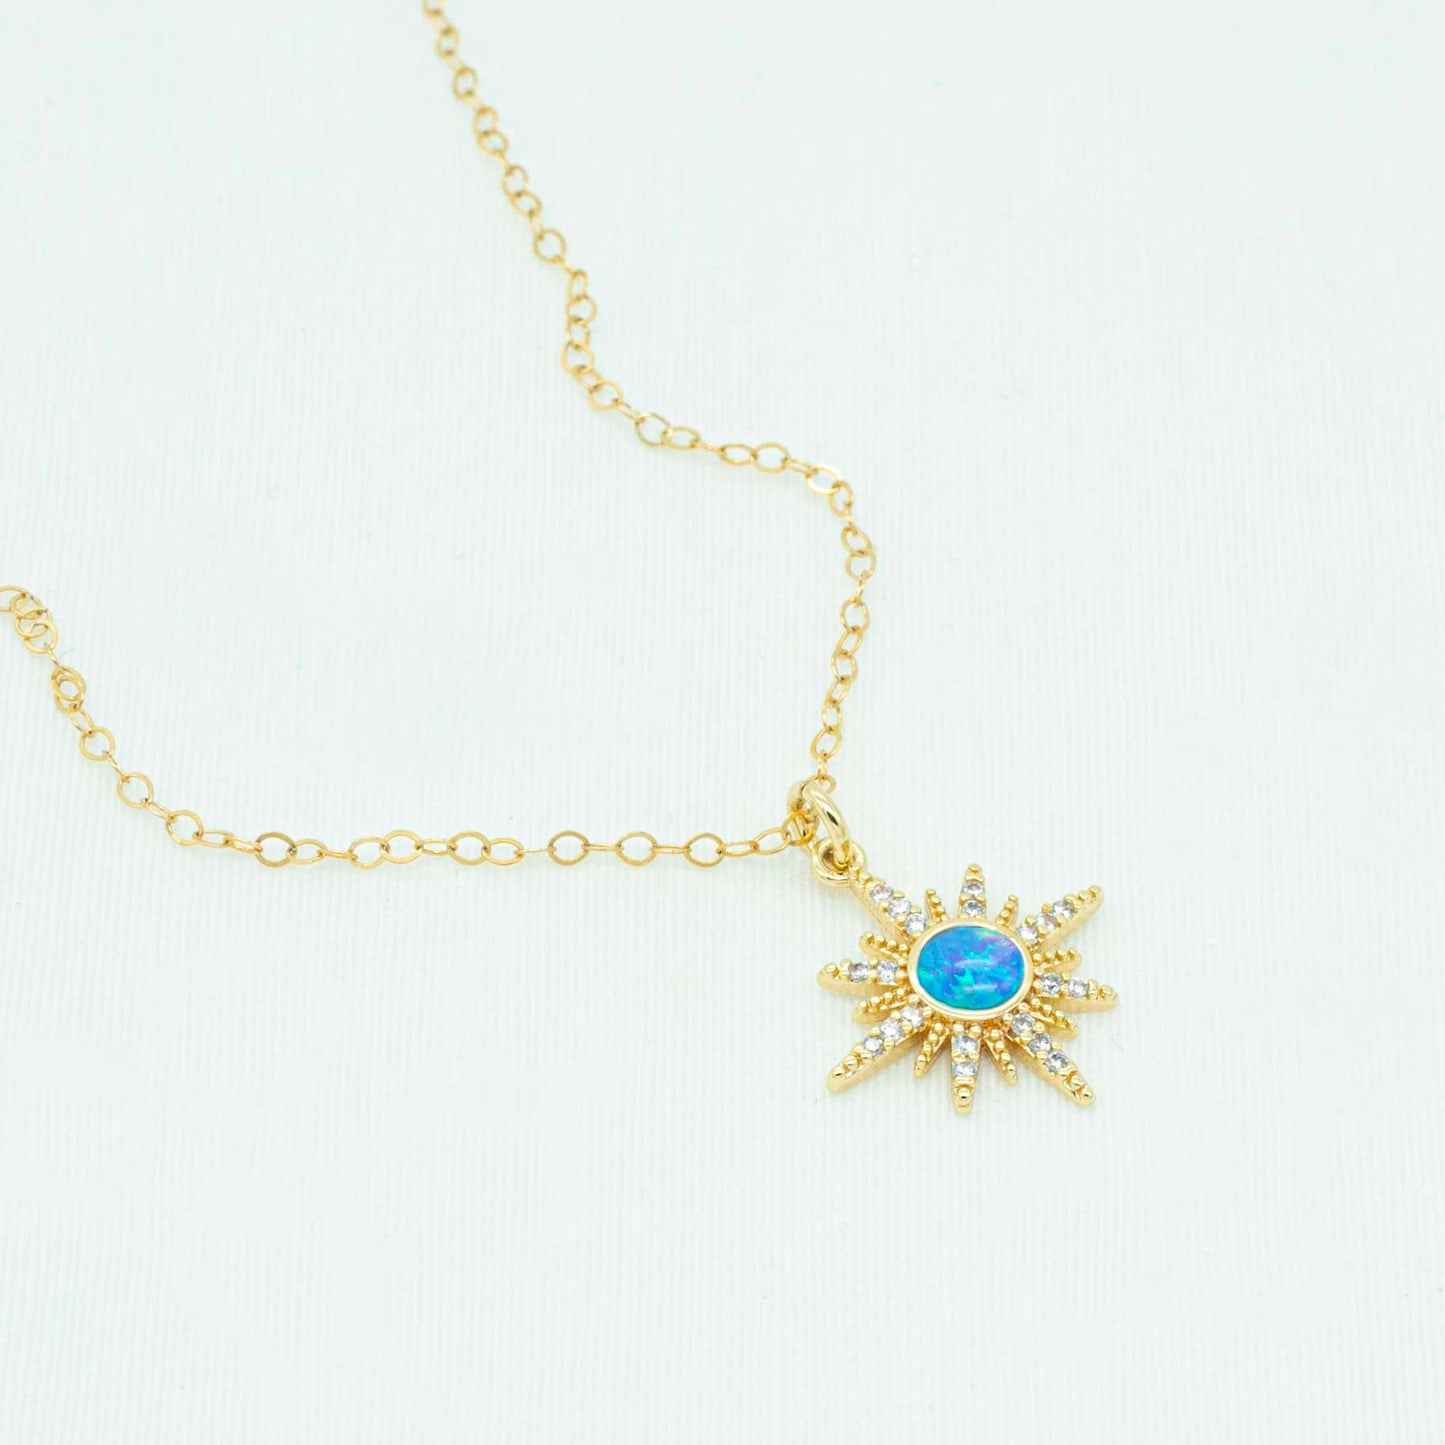 Blue opal sunburst necklace